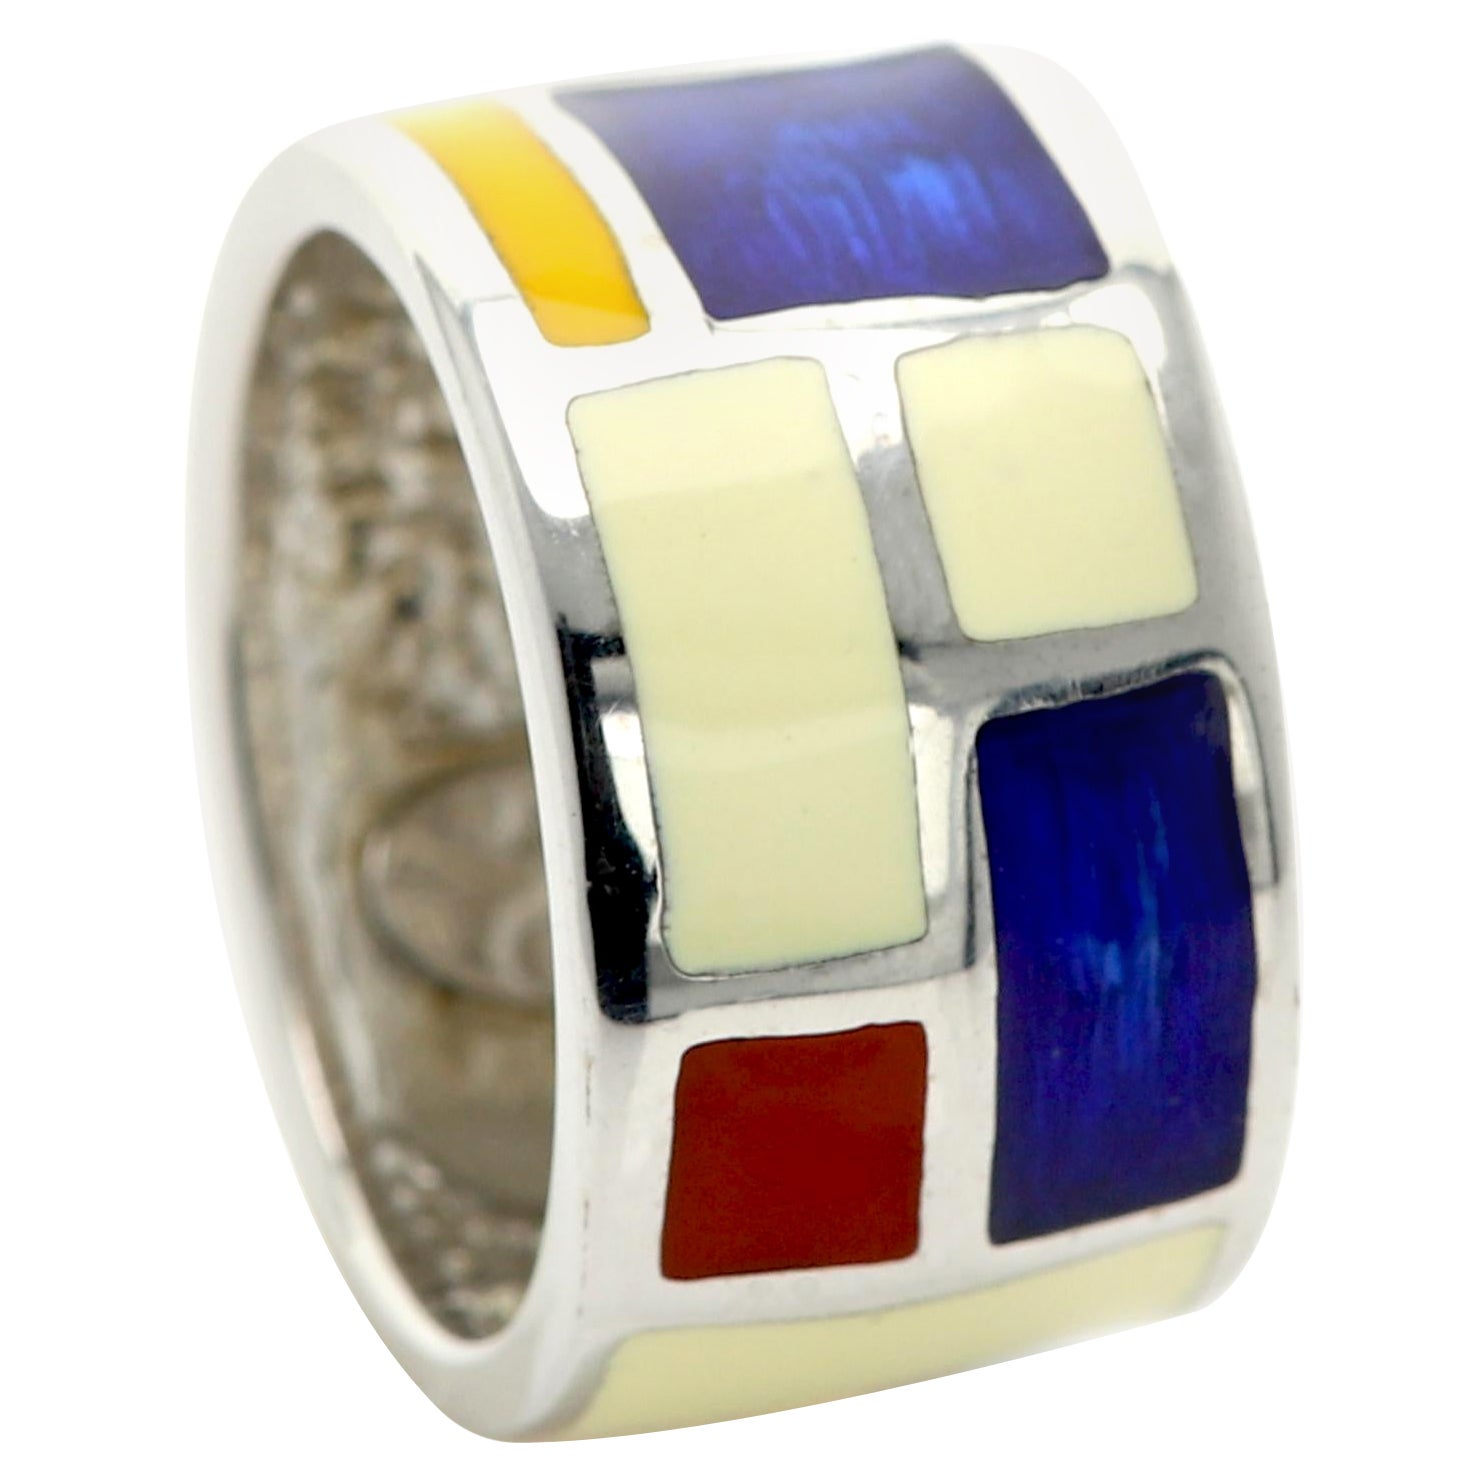 Mondrian Inspired Art Ring Sterling Silver Made In Italy Enamel Fine Art Ring 